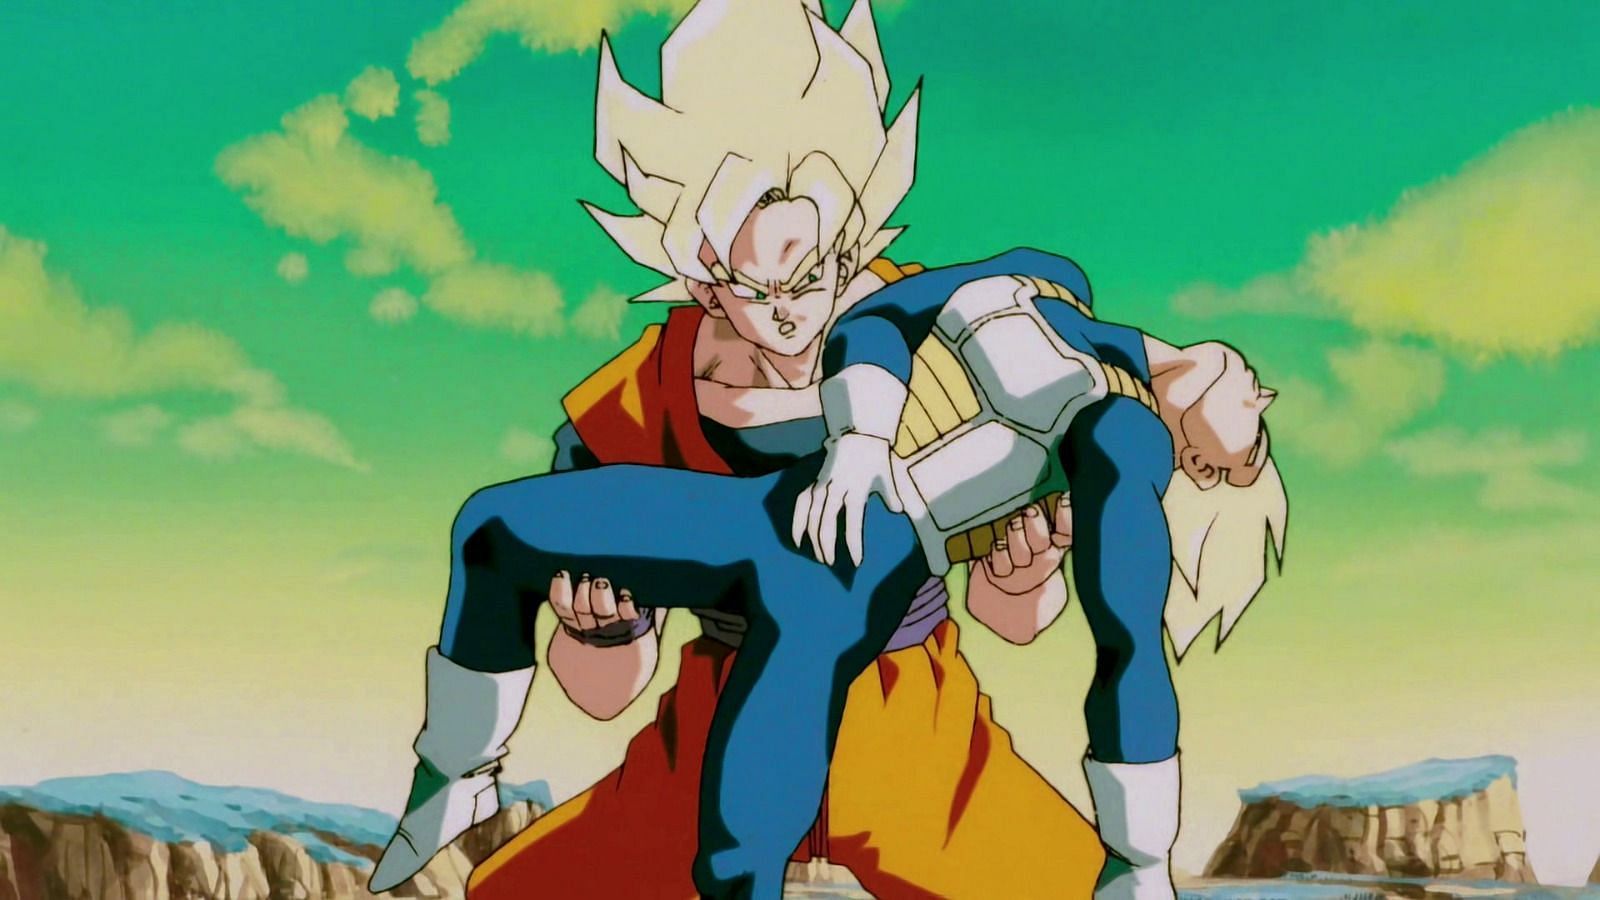 Goku and Cooler (image via Toei Animation)